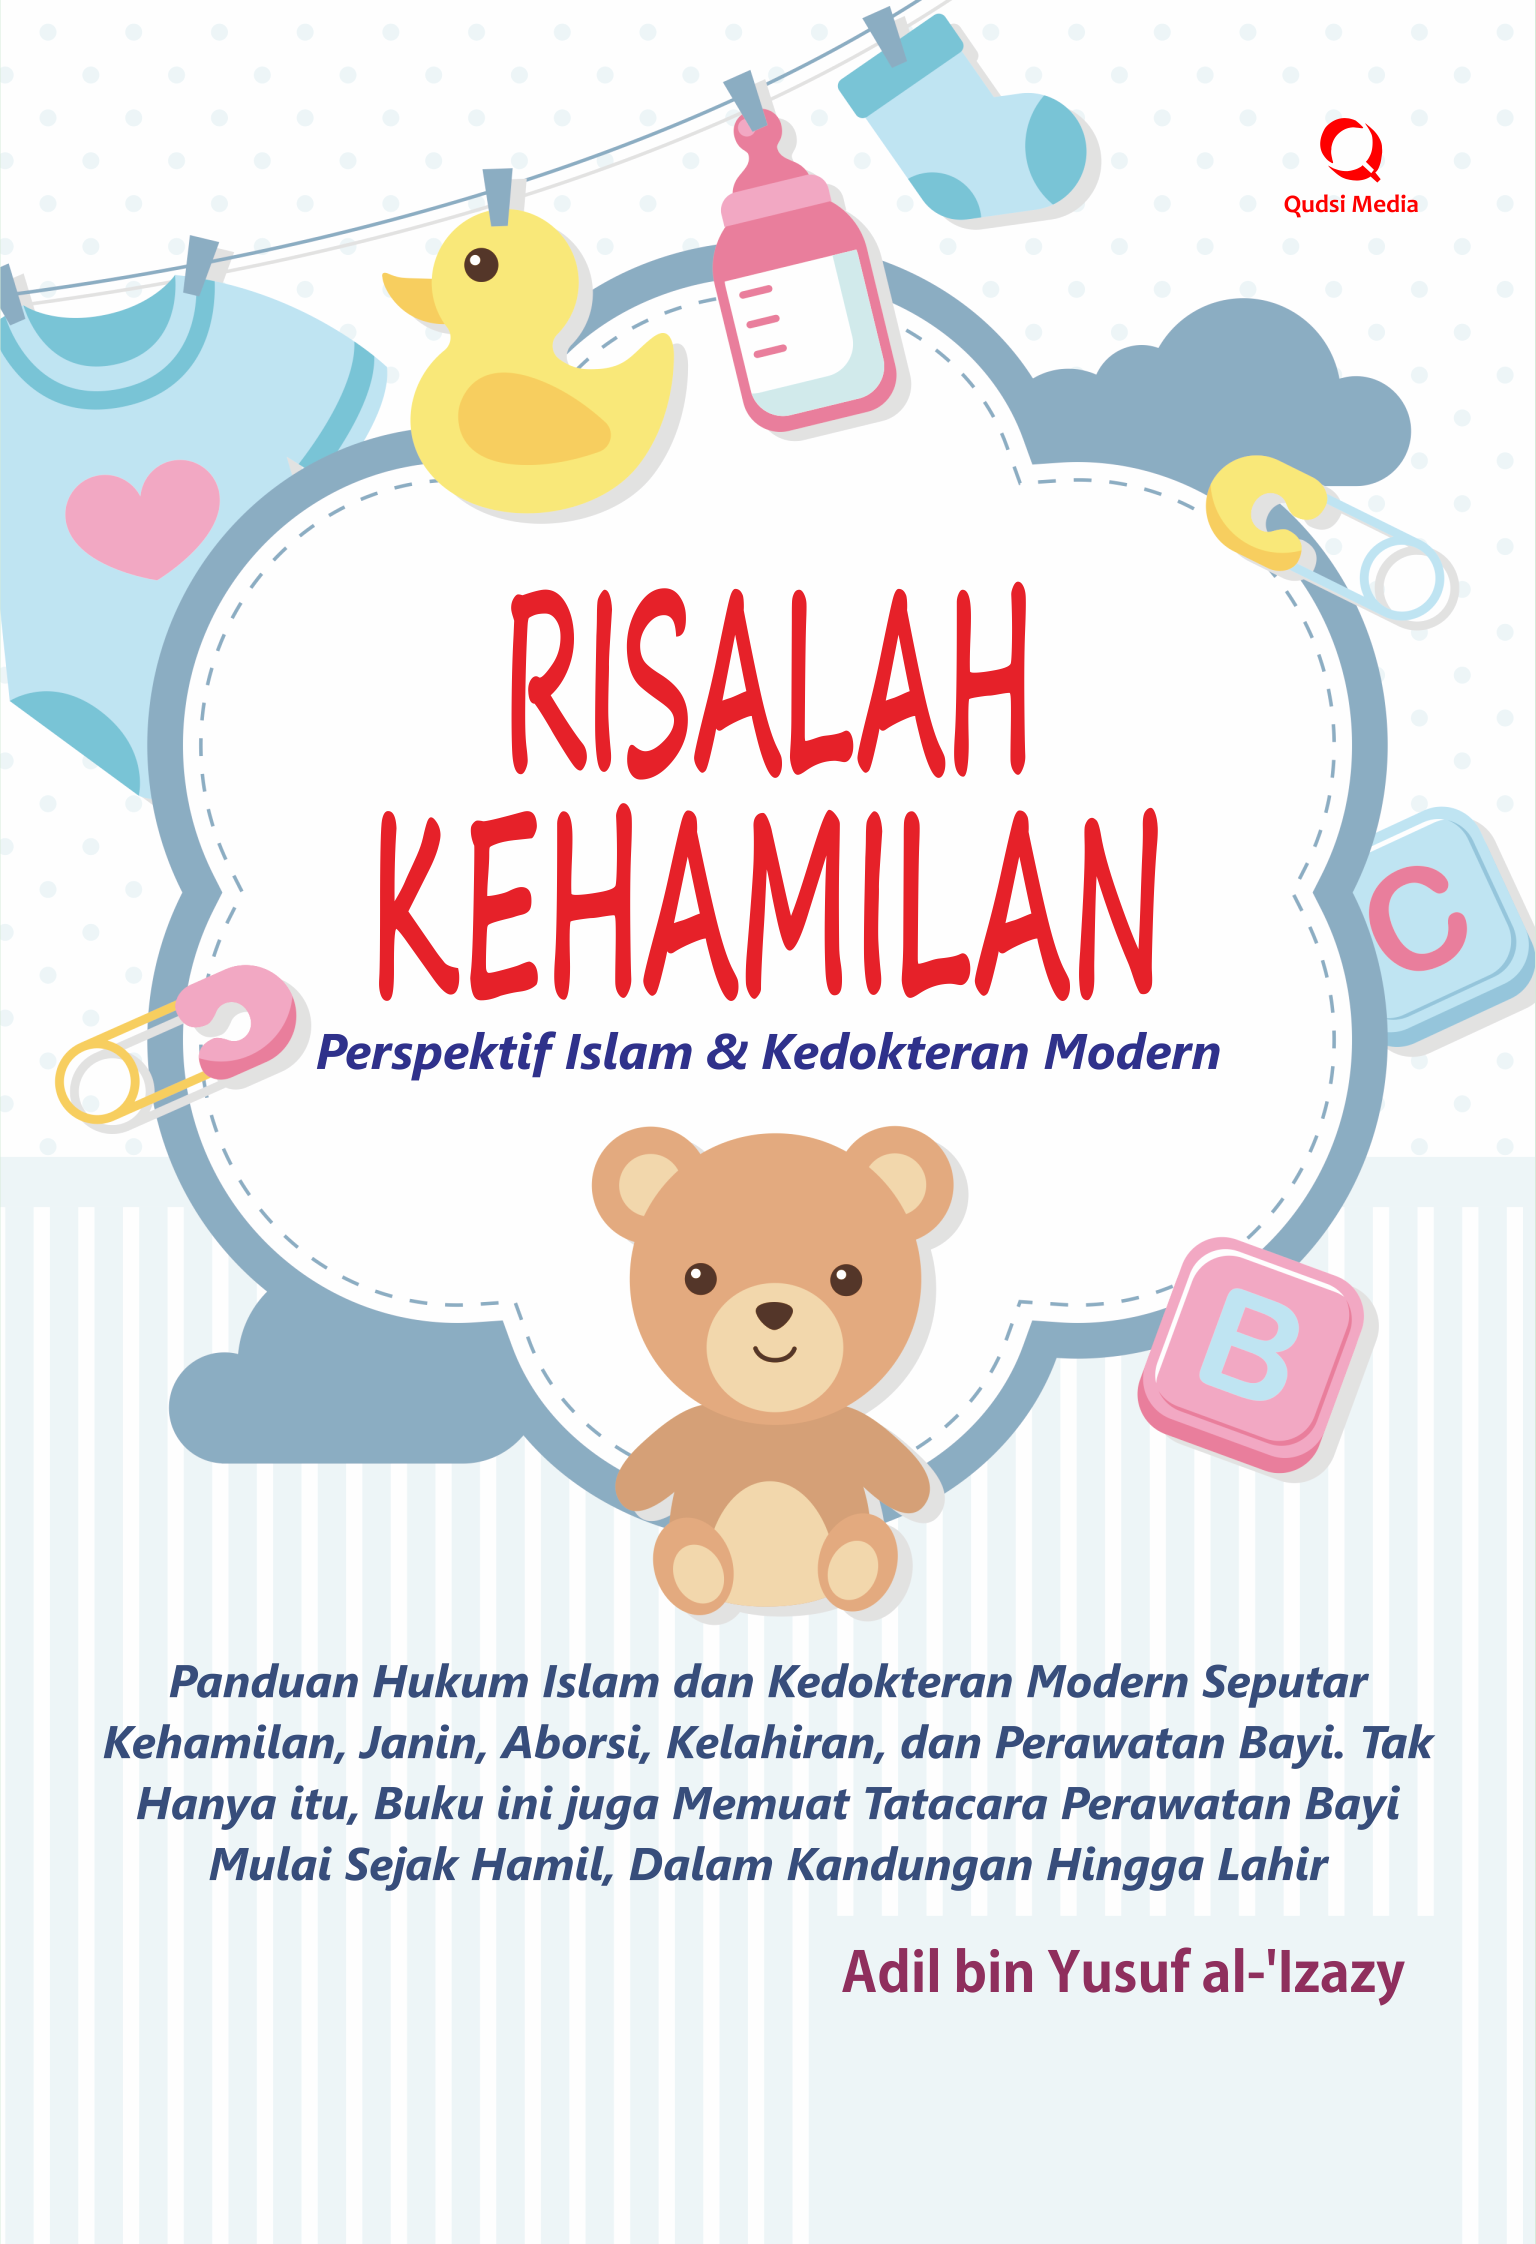 cover/(21-11-2019)risalah-kehamilan-perspektif-islam-amp-kedokteran-modern.png